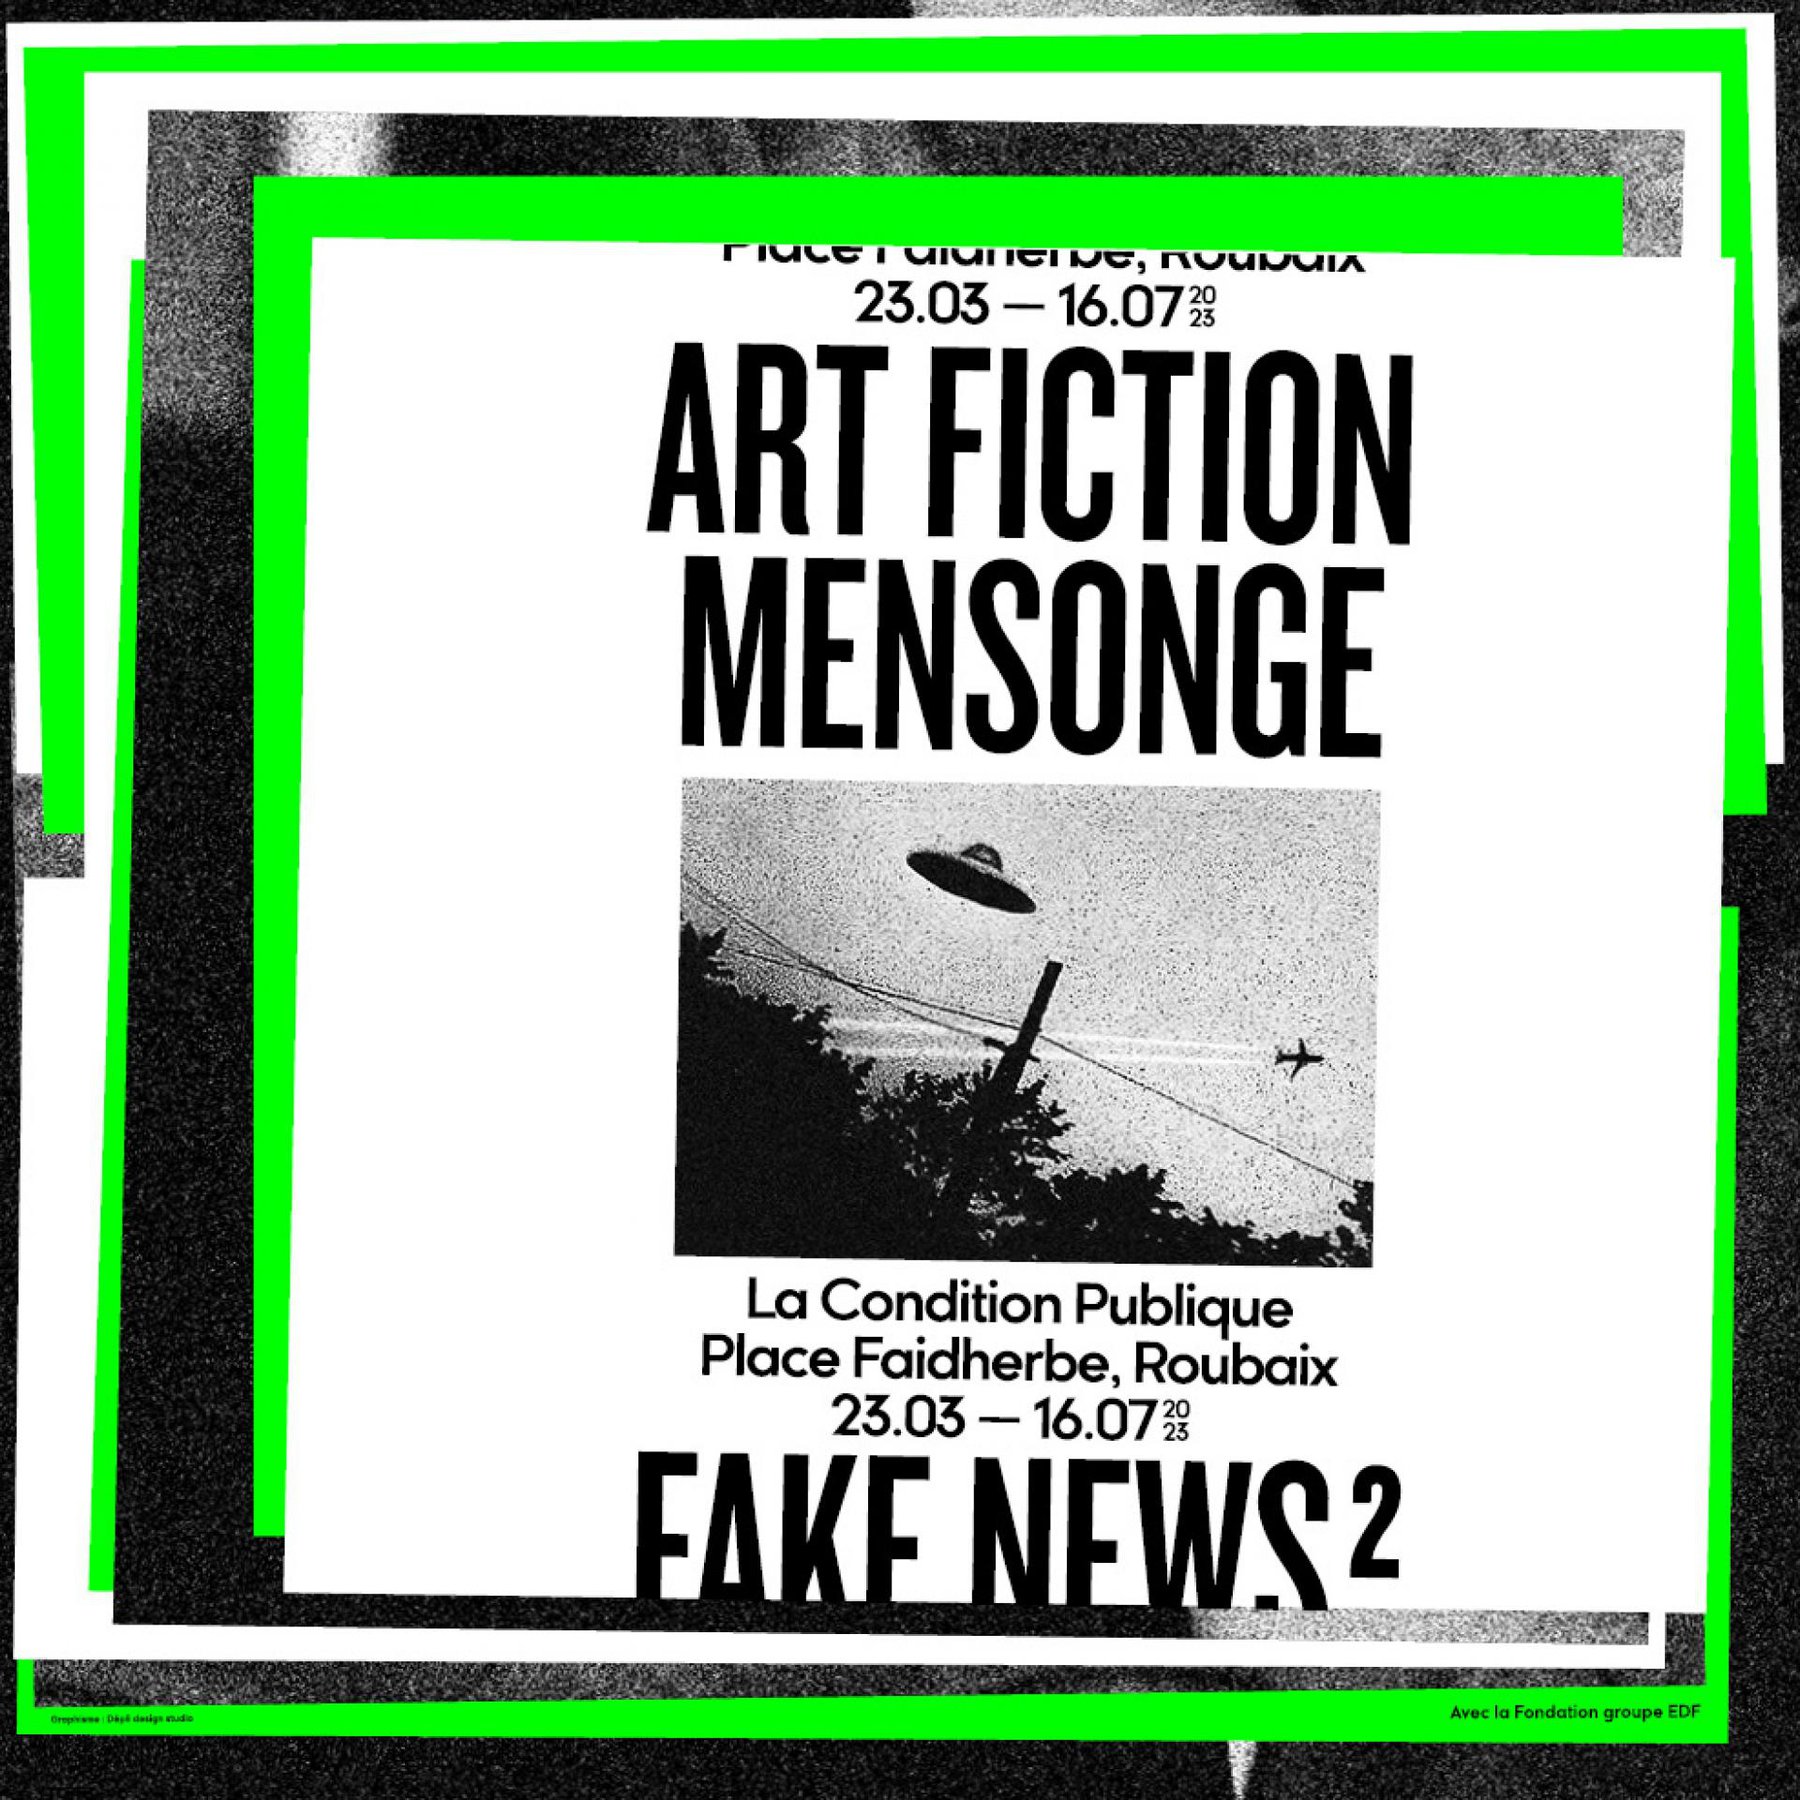 Fake News 2 Art Fiction Mensonge